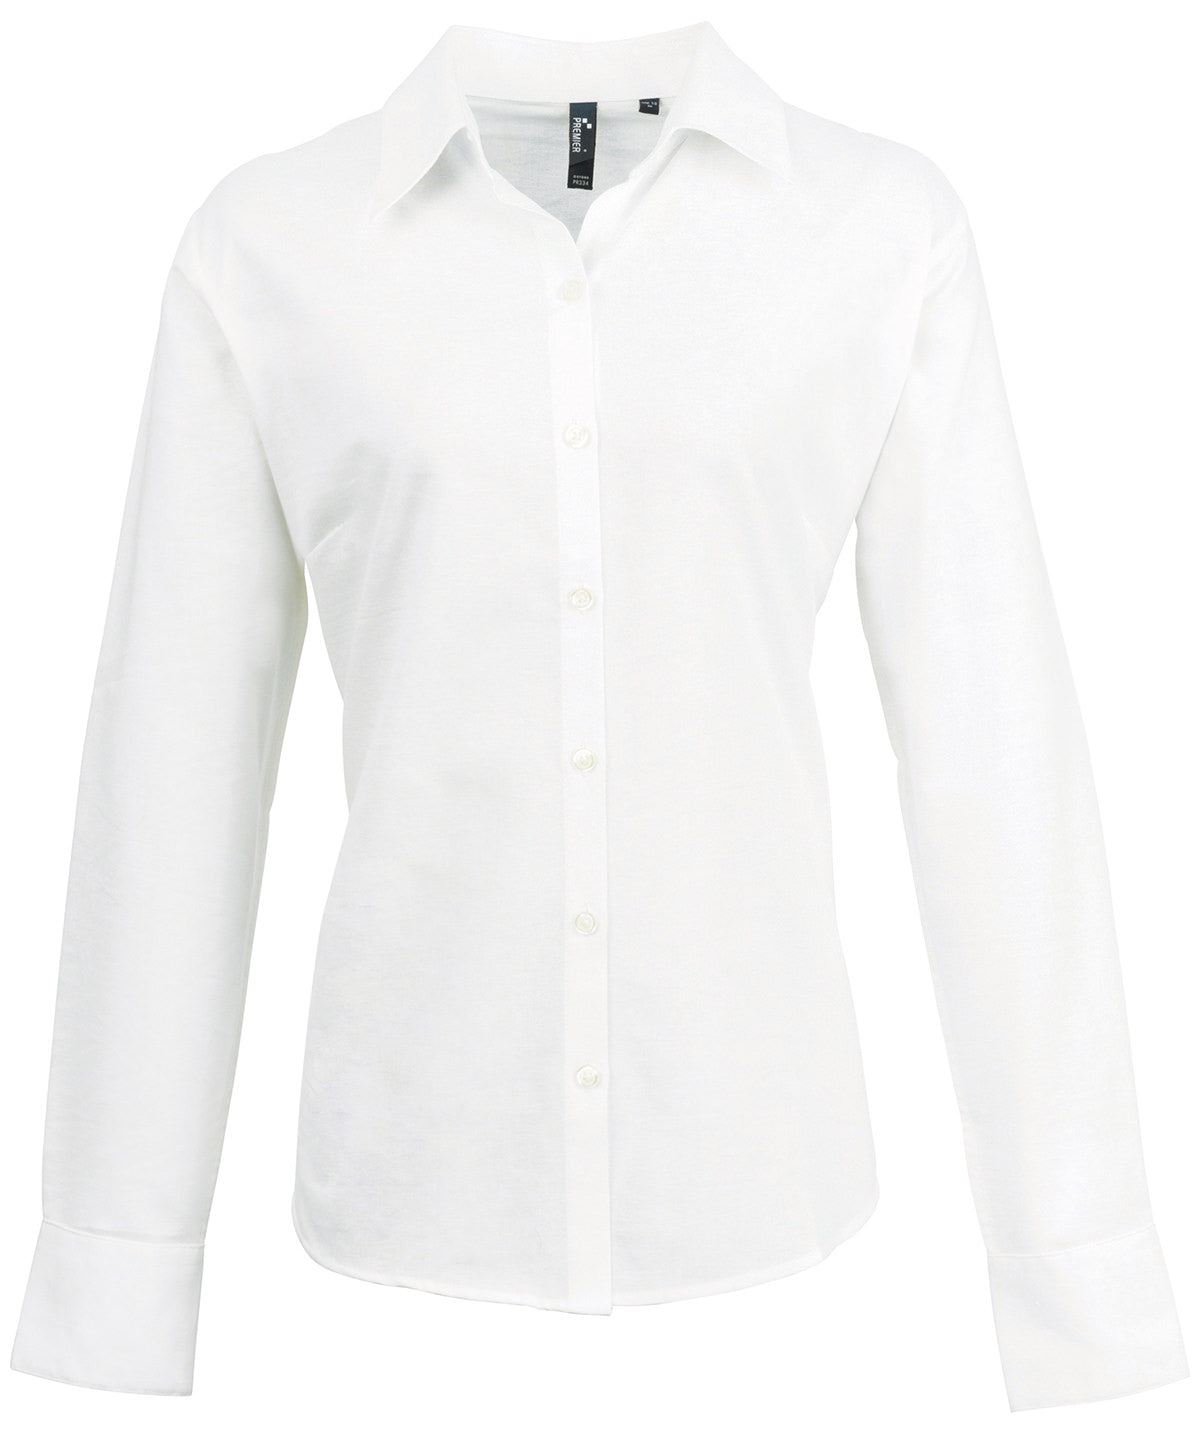 Women's signature Oxford long sleeve shirt